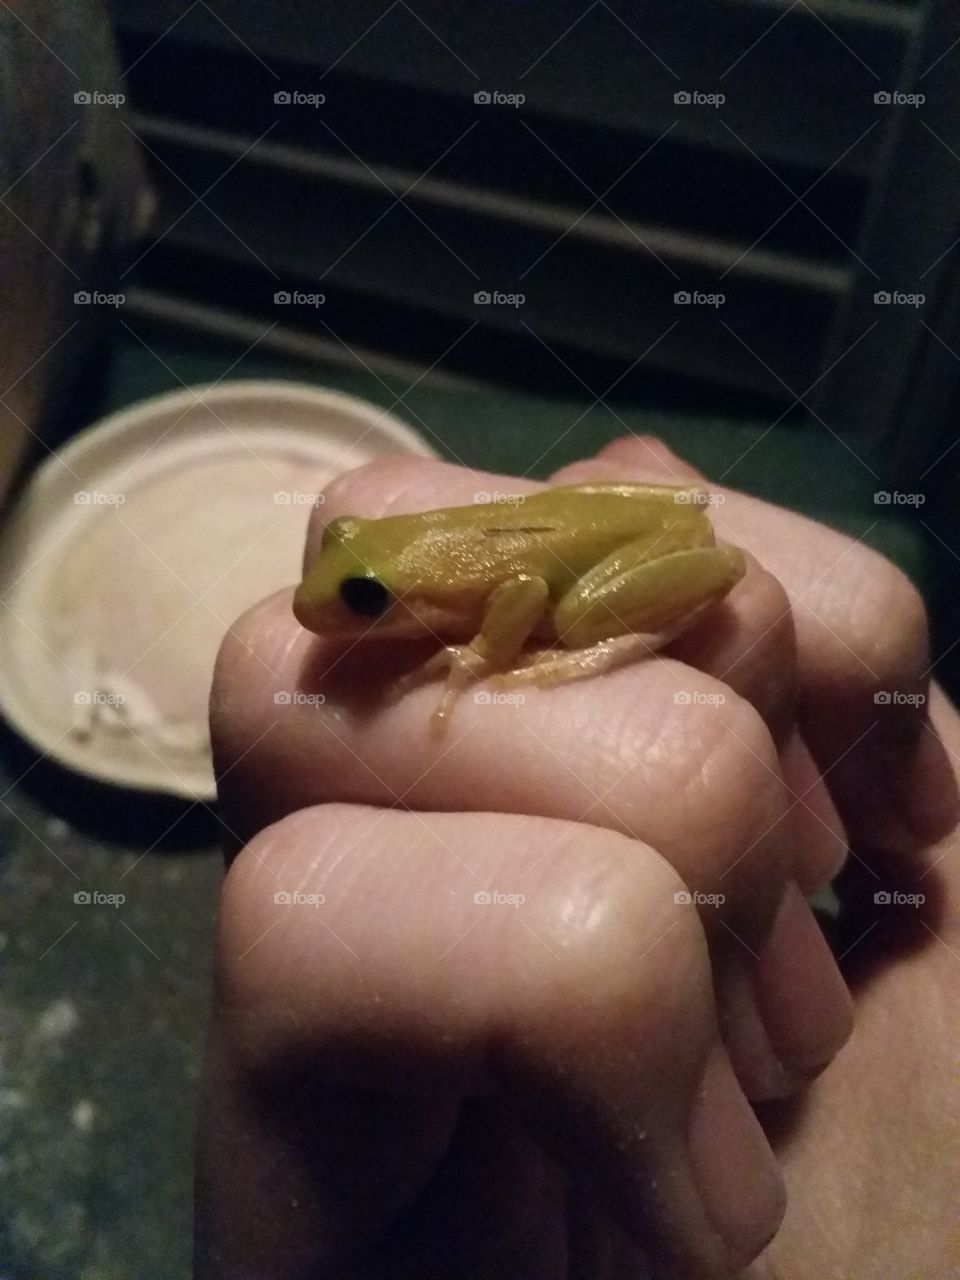 A cute froggo